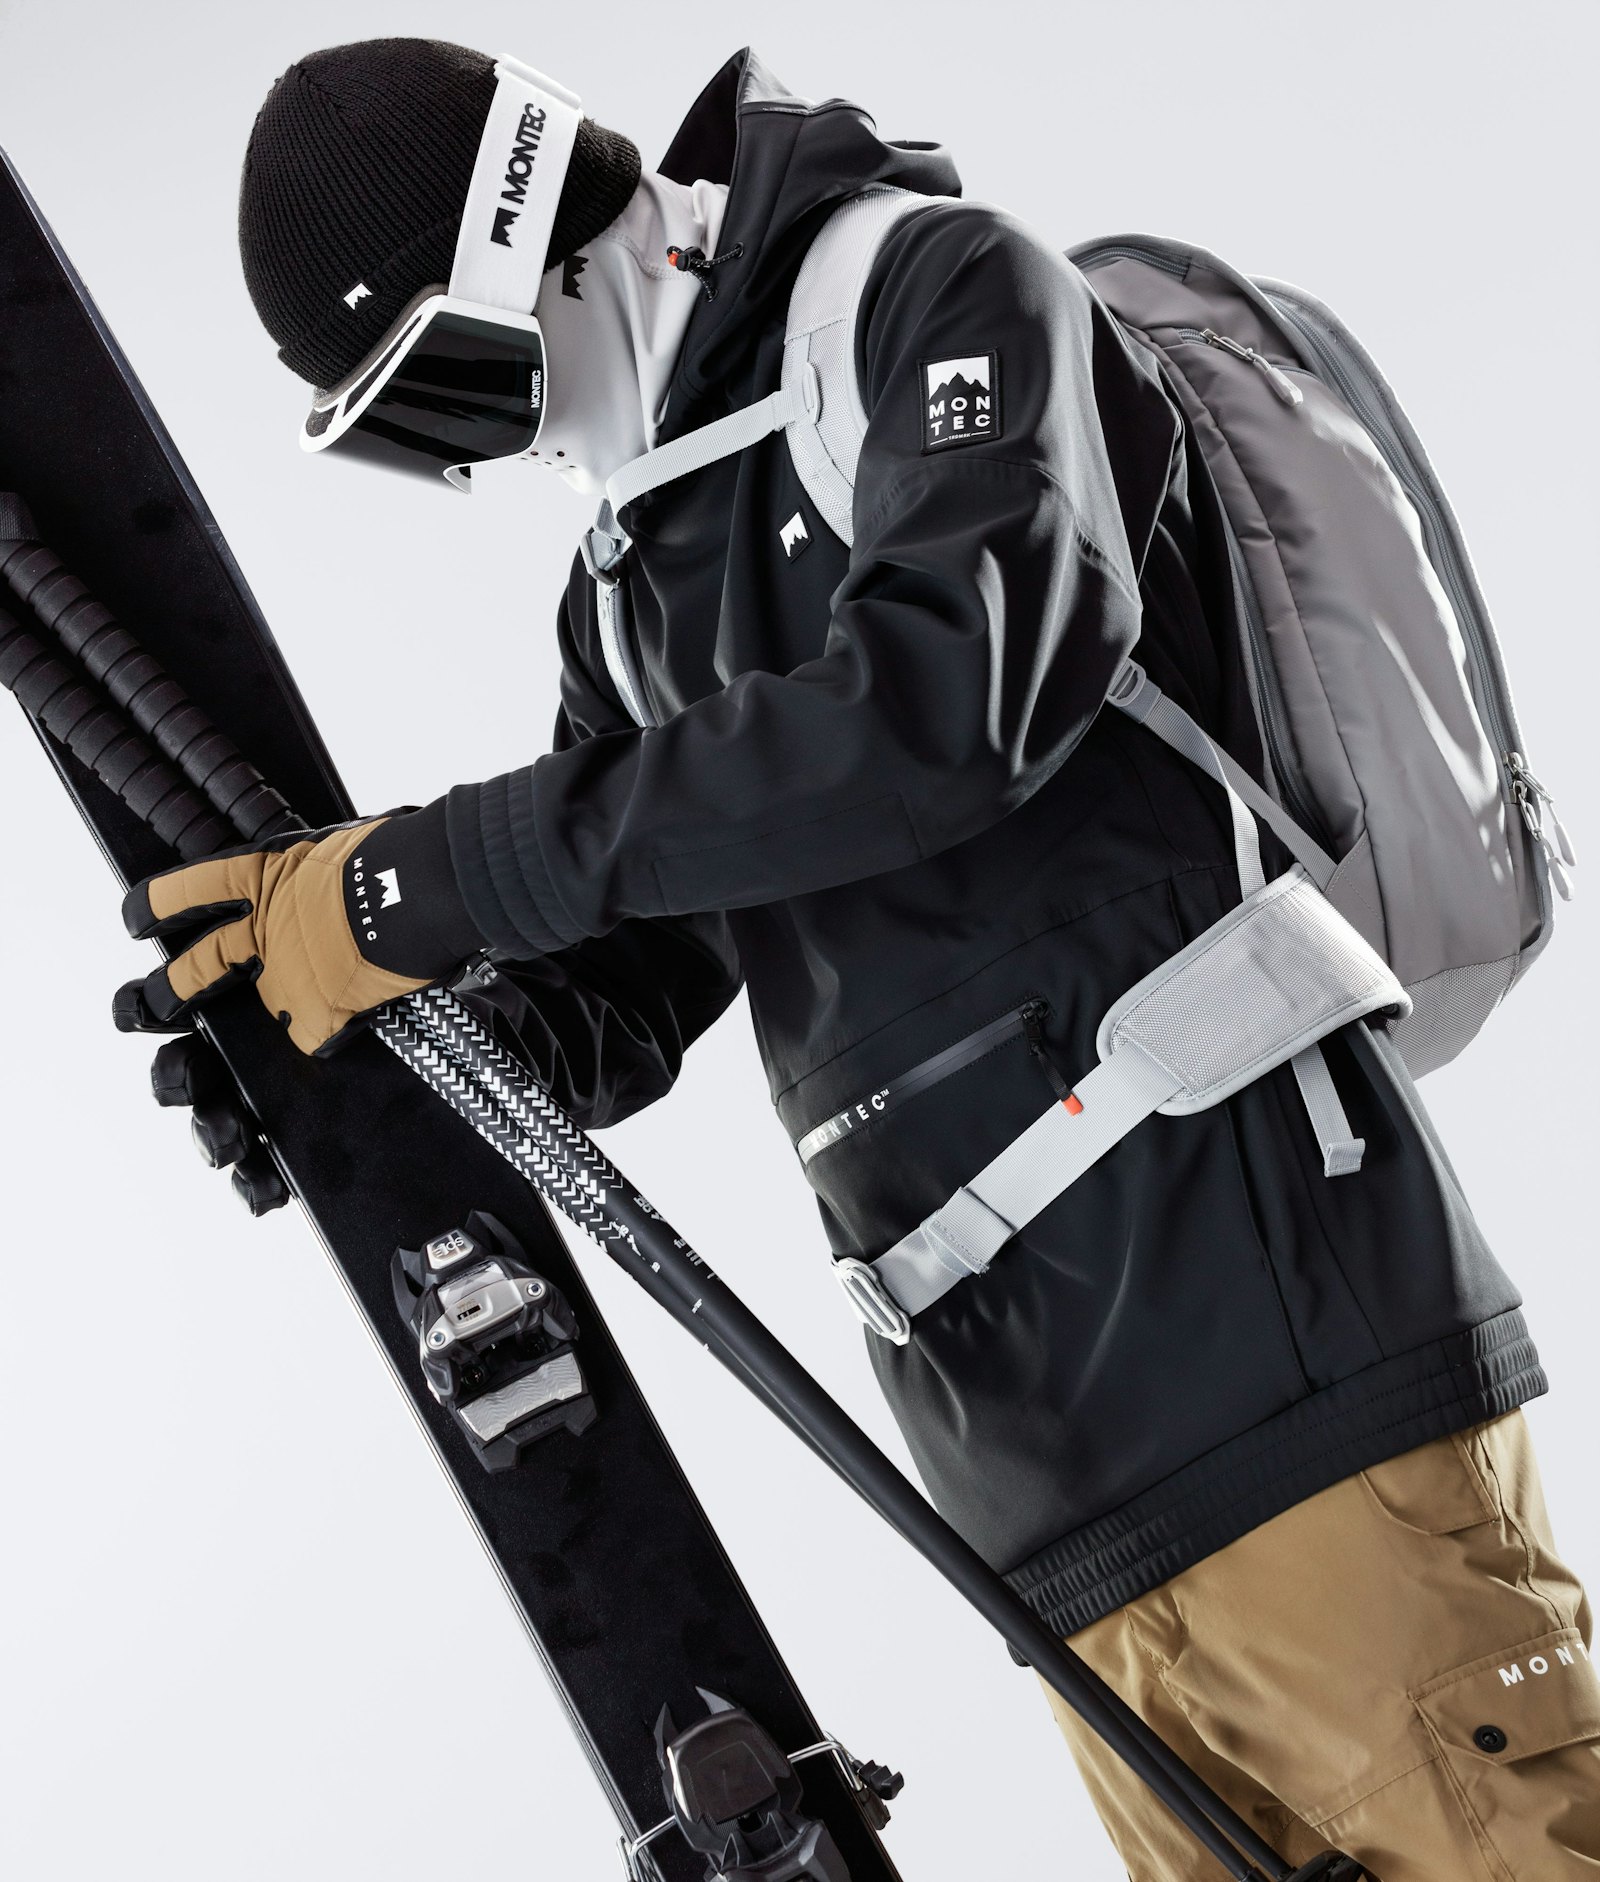 Tempest 2020 Manteau Ski Homme Black